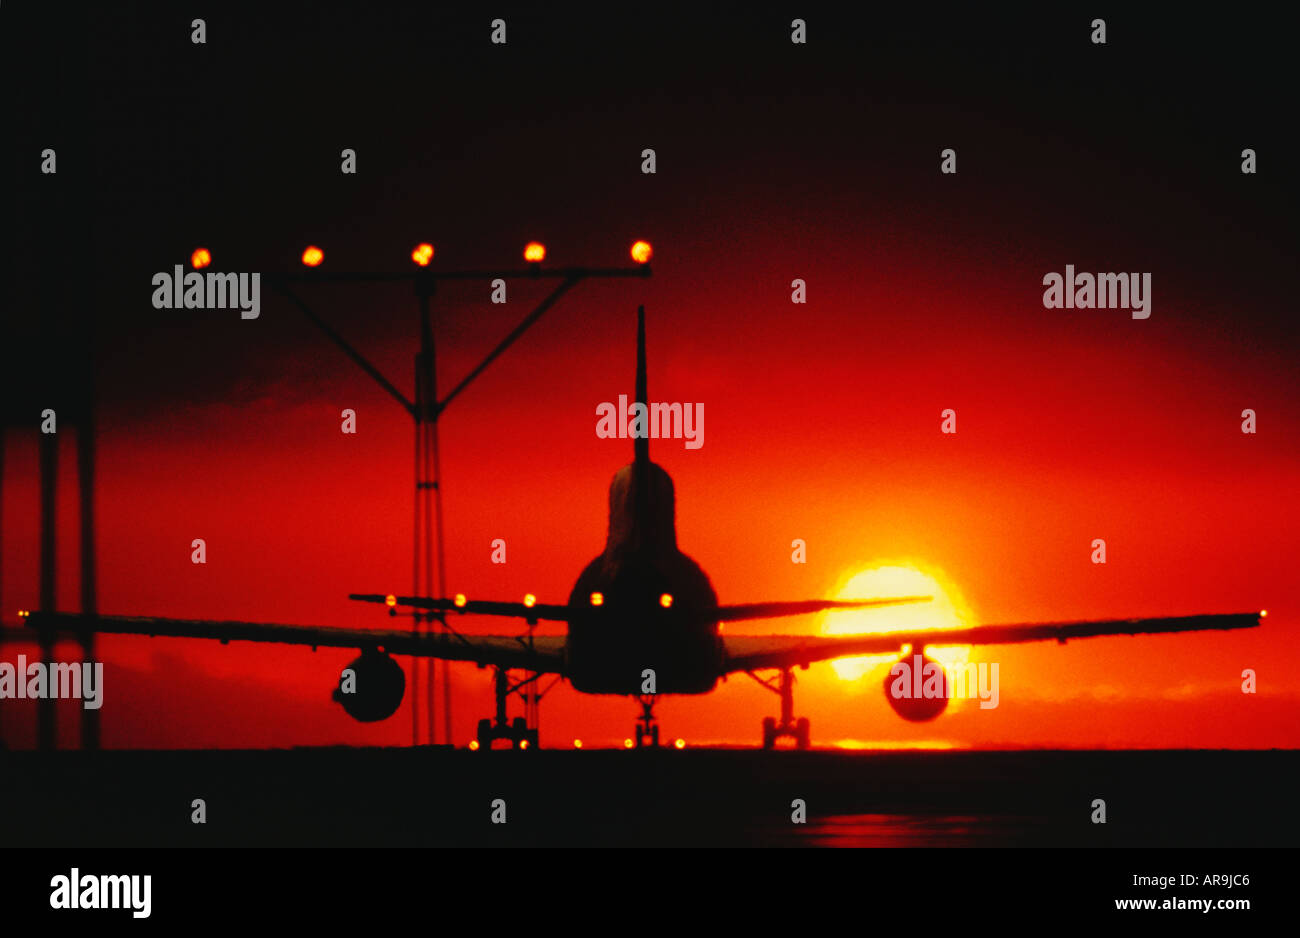 jumbo jet on the runway for take off landing approach lights heading into an golden orange sky at sunset sunrise dusk night show Stock Photo